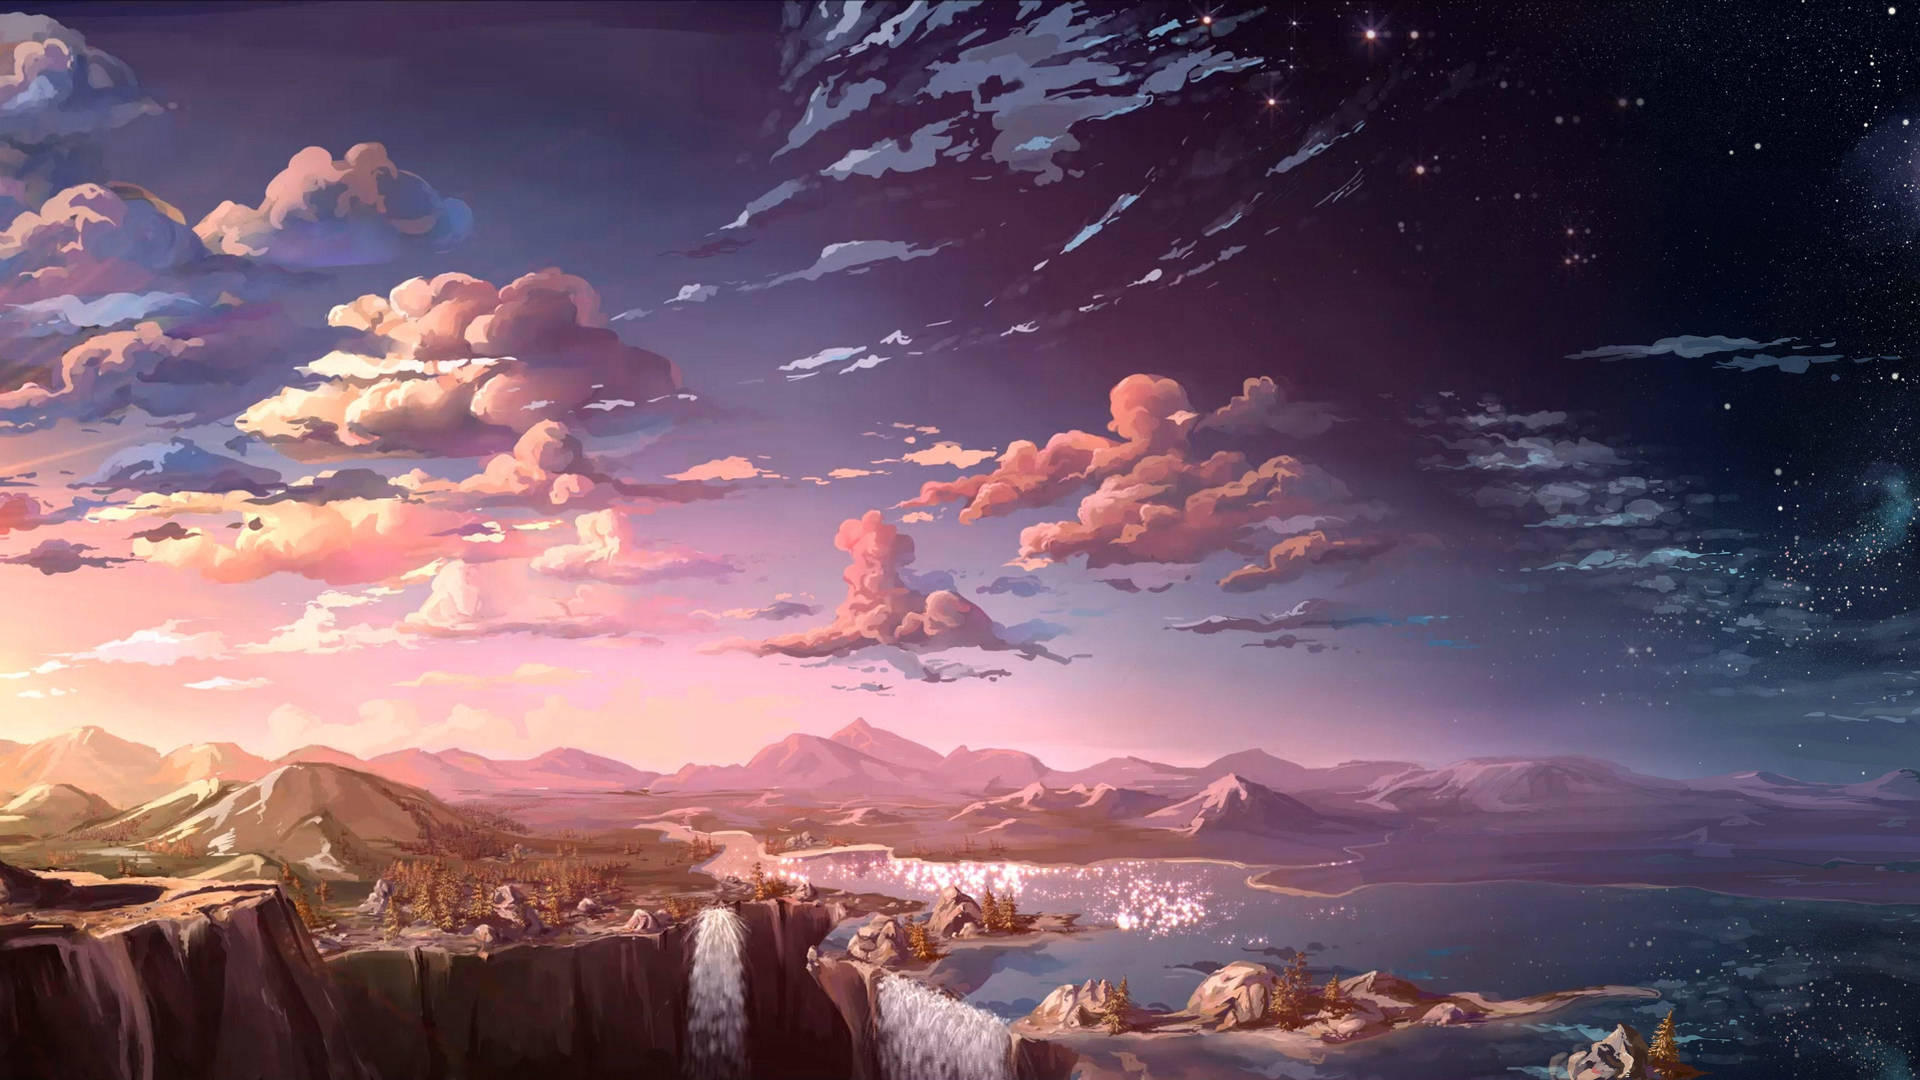 "Seascape in a Wondrous Fantasy Land" Wallpaper